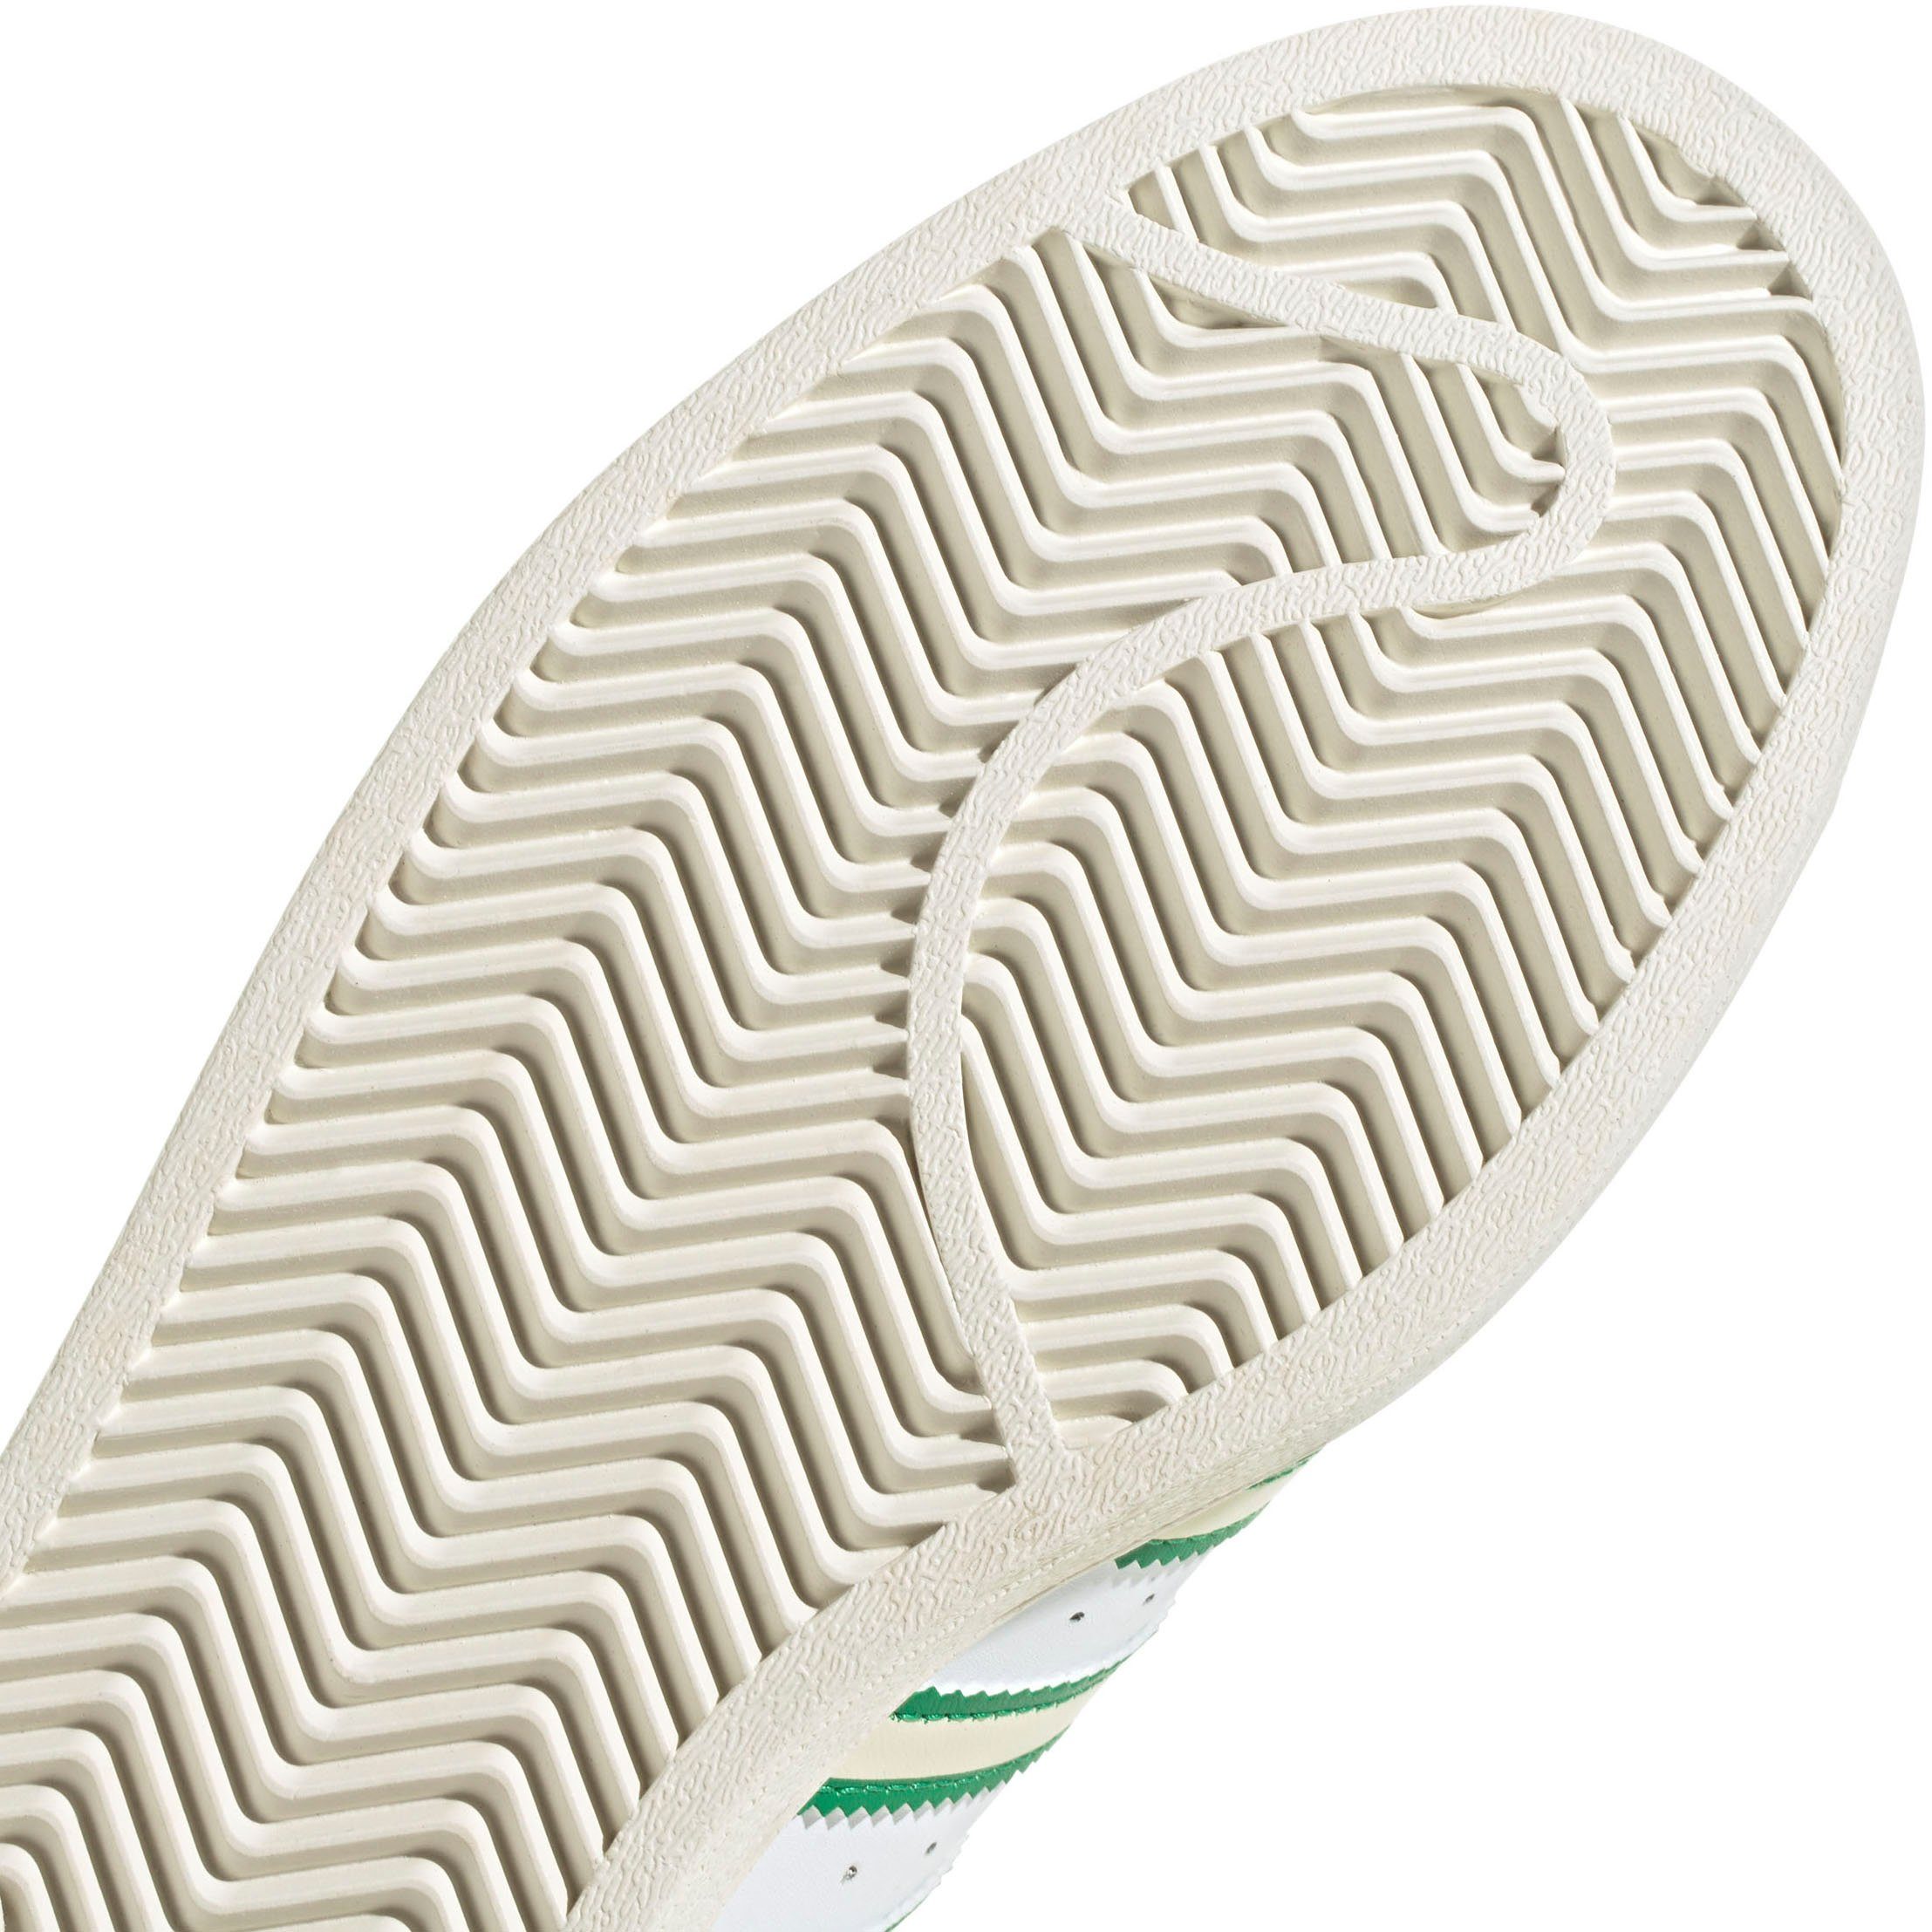 adidas Originals SUPERSTAR Sneaker weiß-grün